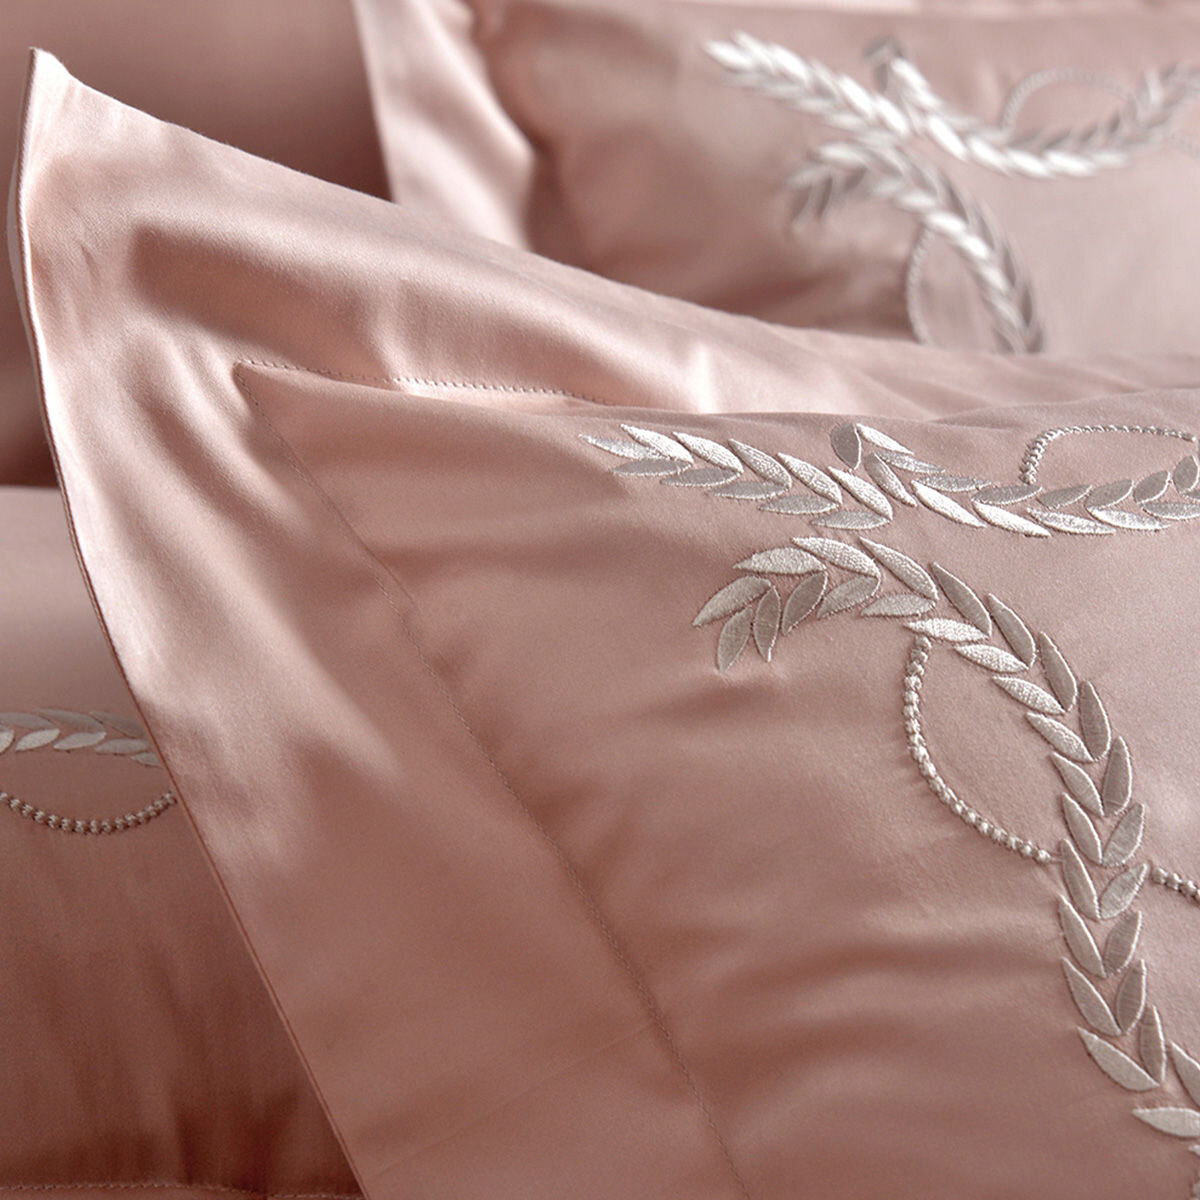 La Belle 雙人加大300織純棉刺繡被套床包4件組 180公分 X 186公分 藤蔓款 蘿莉粉